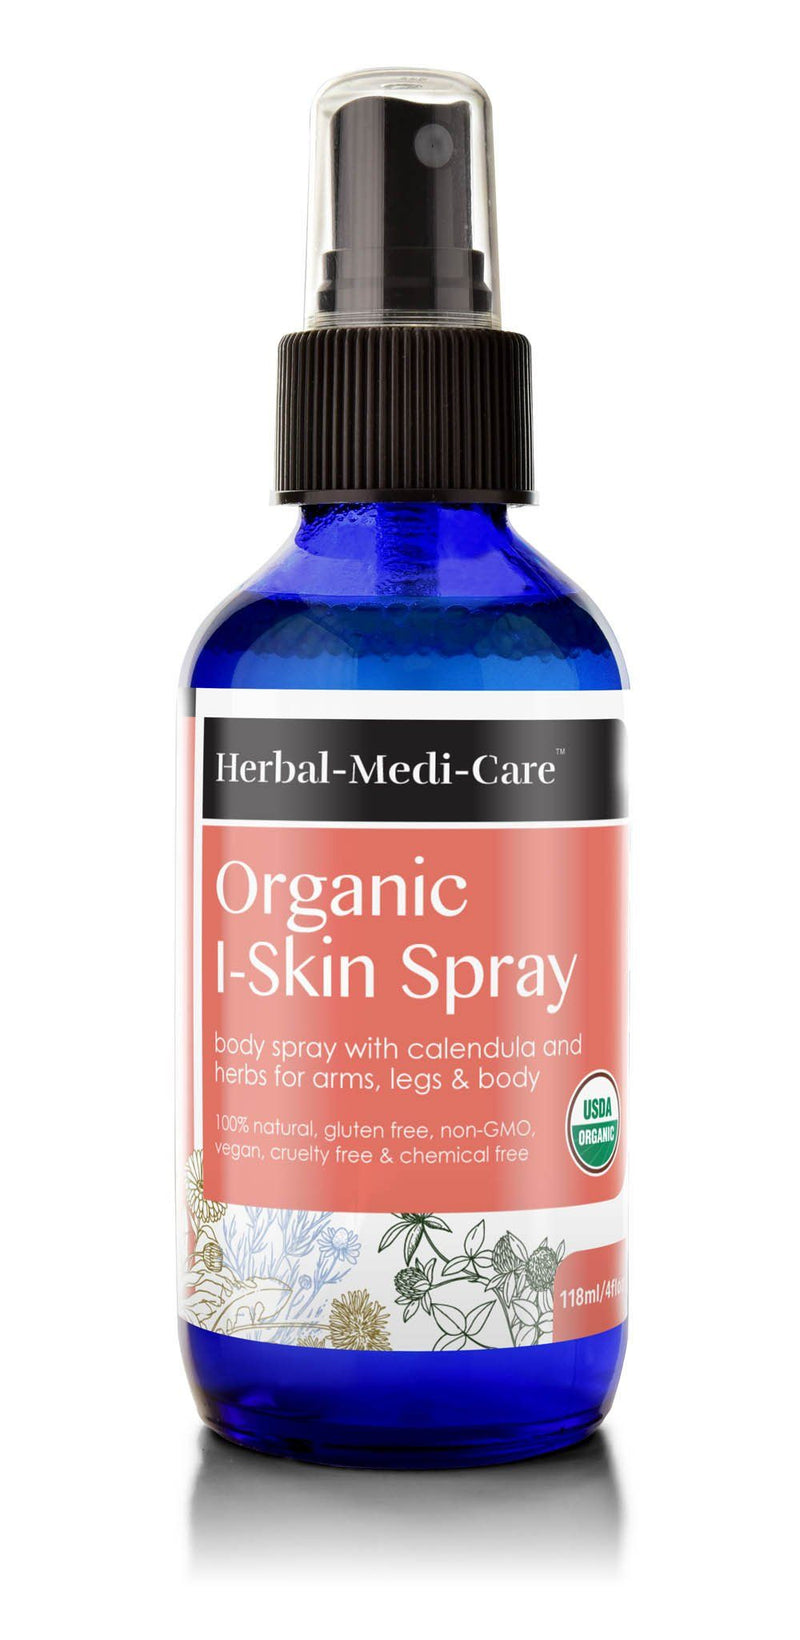 Herbal-Medi-Care Organic I-Skin (Itchy) Spray; 4floz - Herbal-Medi-Care Organic I-Skin (Itchy) Spray; 4floz - Herbal-Medi-Care Organic I-Skin (Itchy) Spray; 4floz